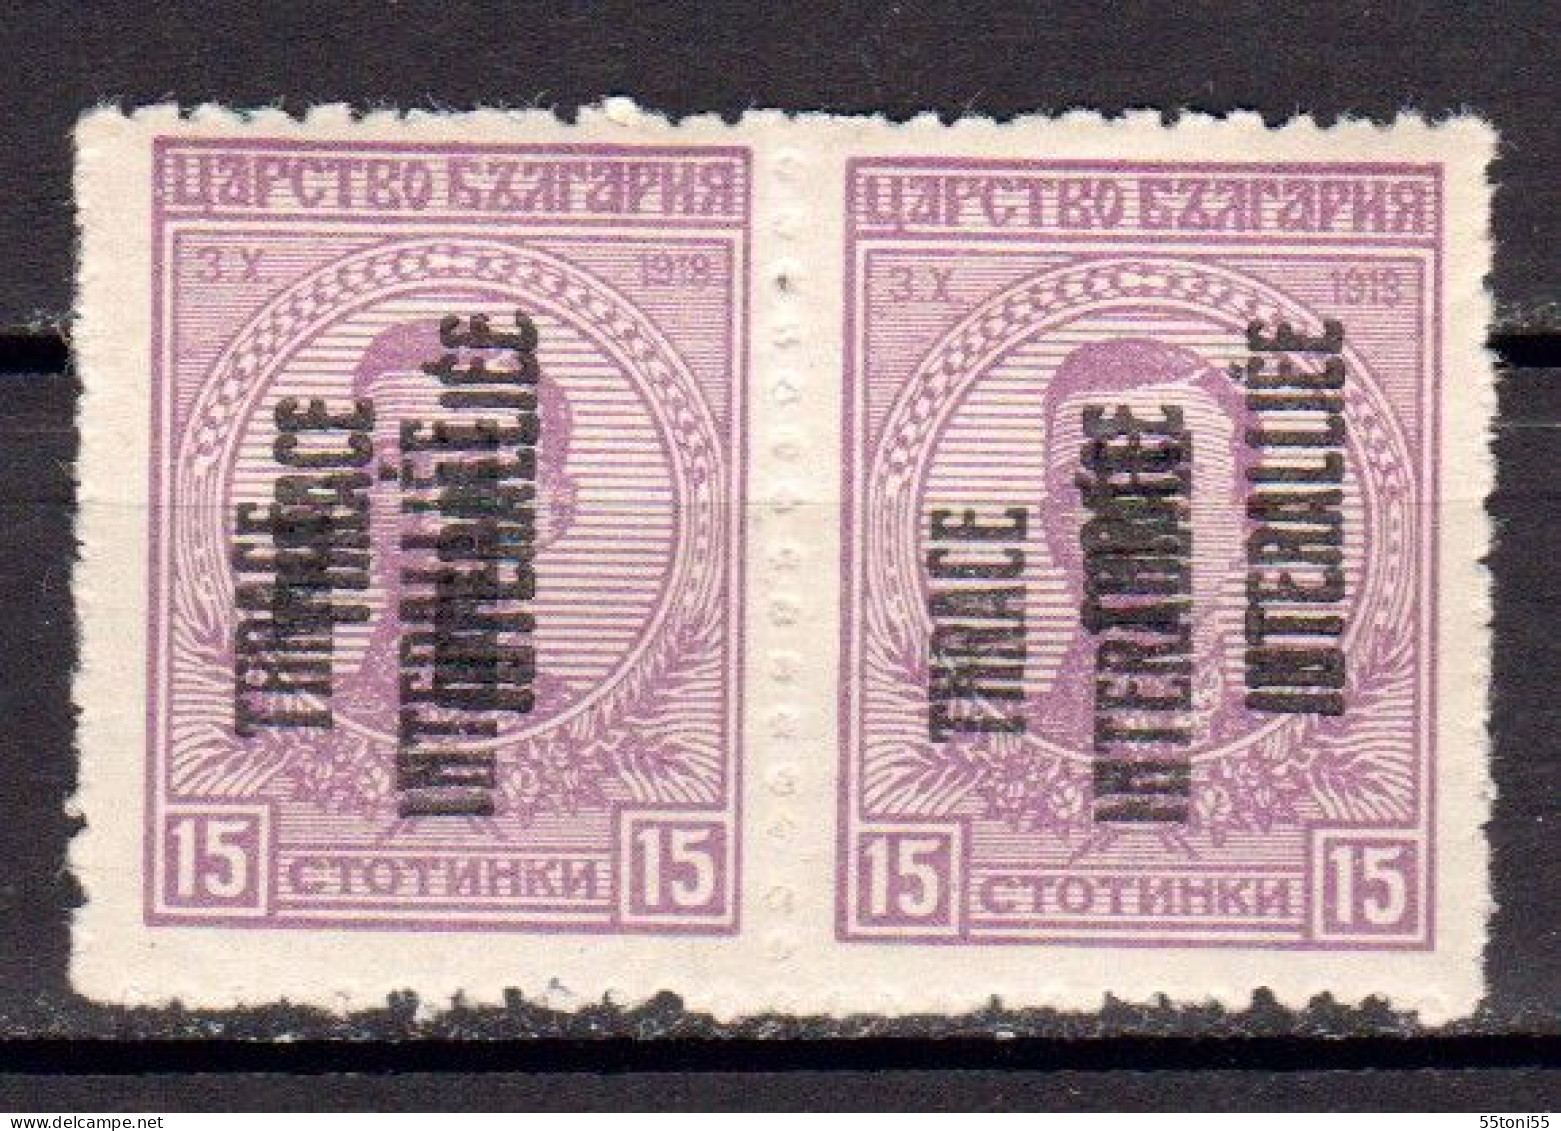 ERROR - Double Overprint 1920 THRACE OCCIDENTALE –15 St. -MNH( Pair )Bulgaria Bulgarie,Greece Grece - Errors, Freaks & Oddities (EFO)